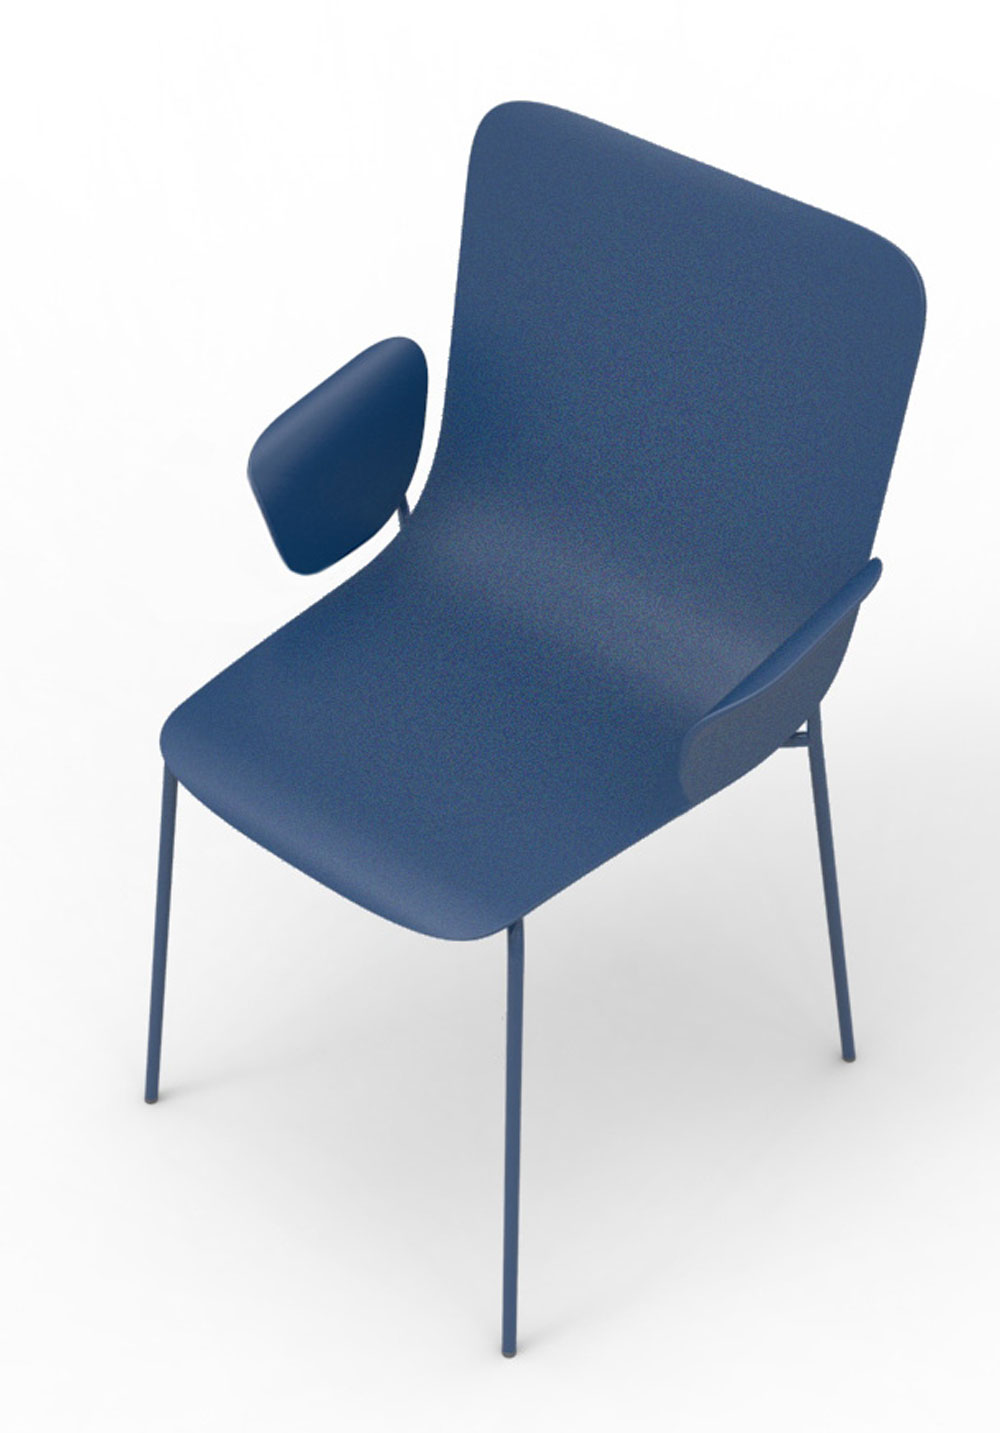 dissenycv.es-miro-Capdell-design-brief-2015---Chair-concept-proposal_Dec3-2015-14-baja